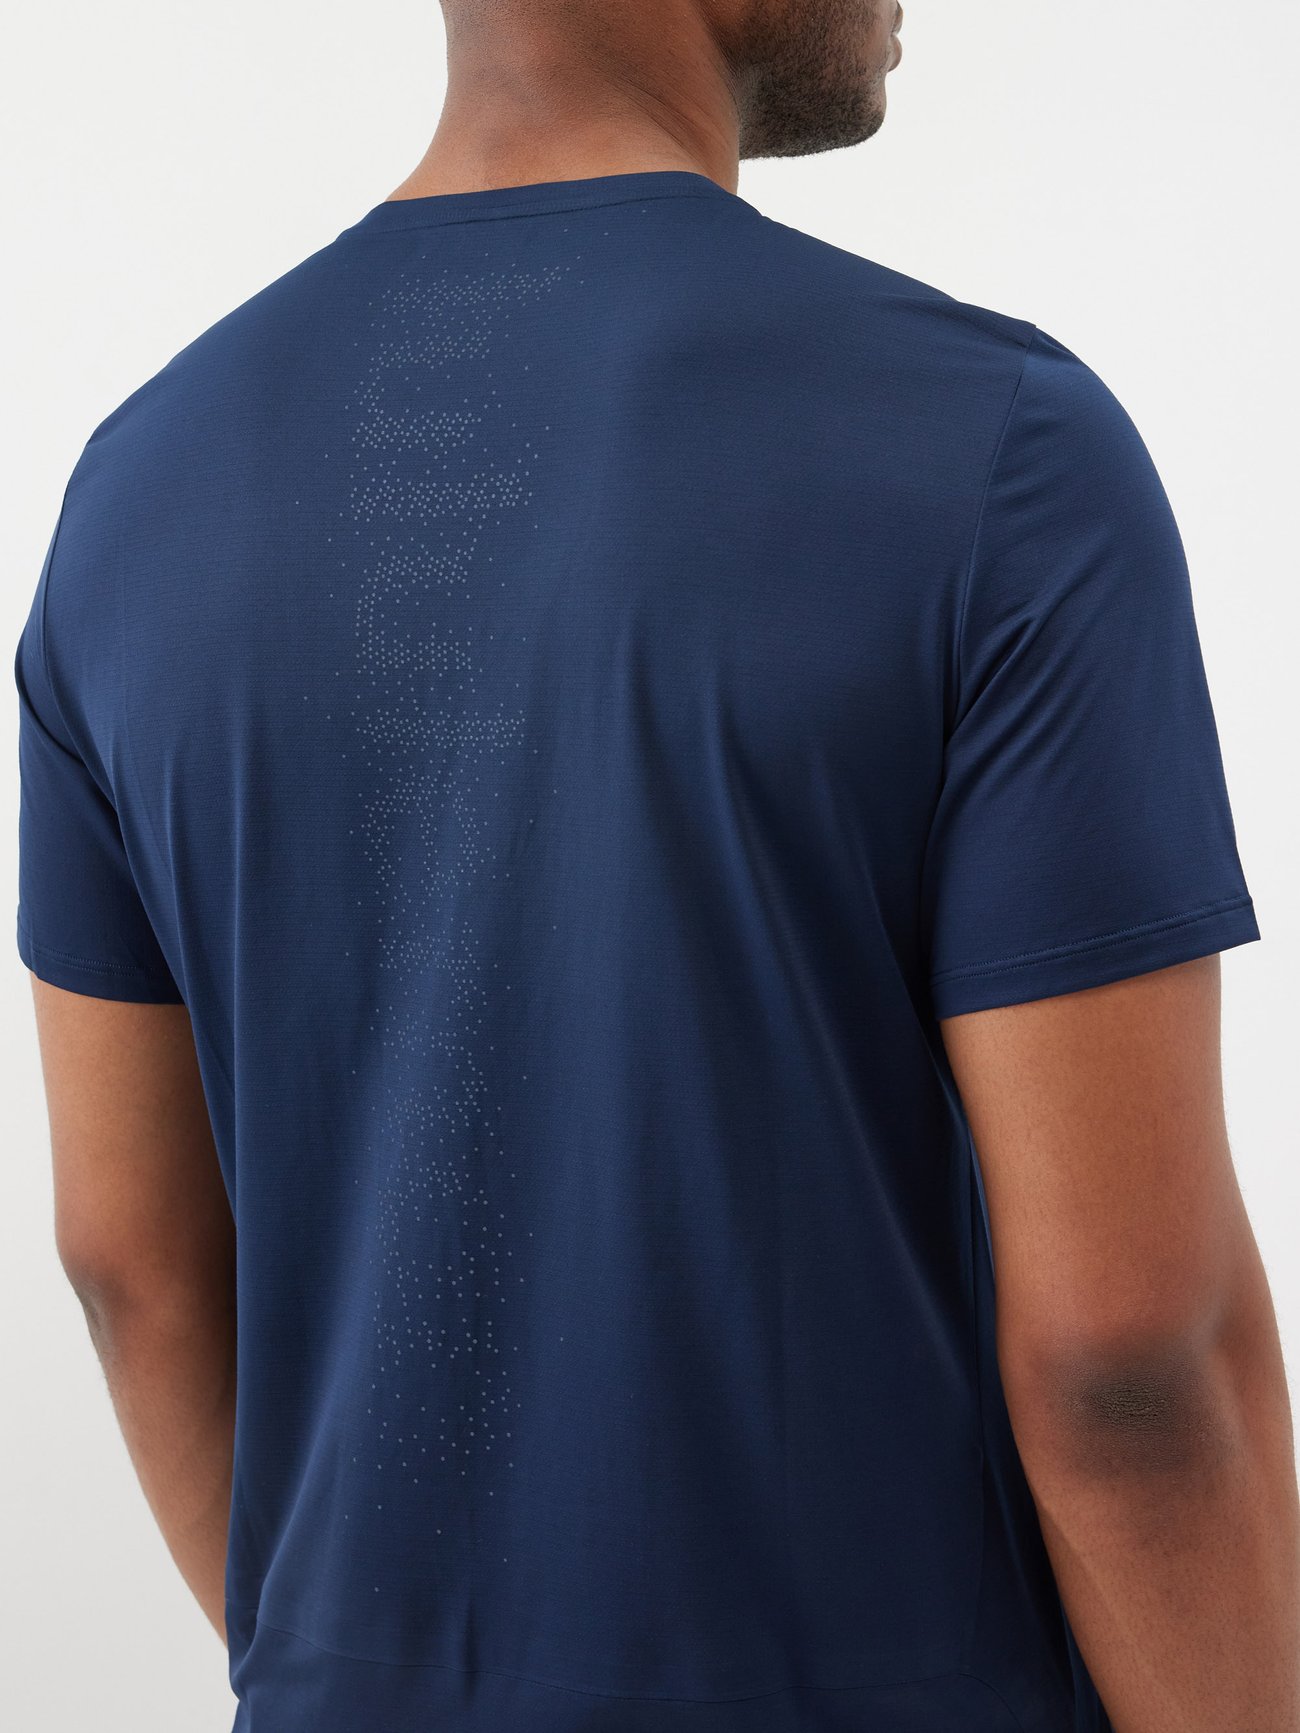 Navy City logo-print recycled-fibre T-shirt, Lululemon